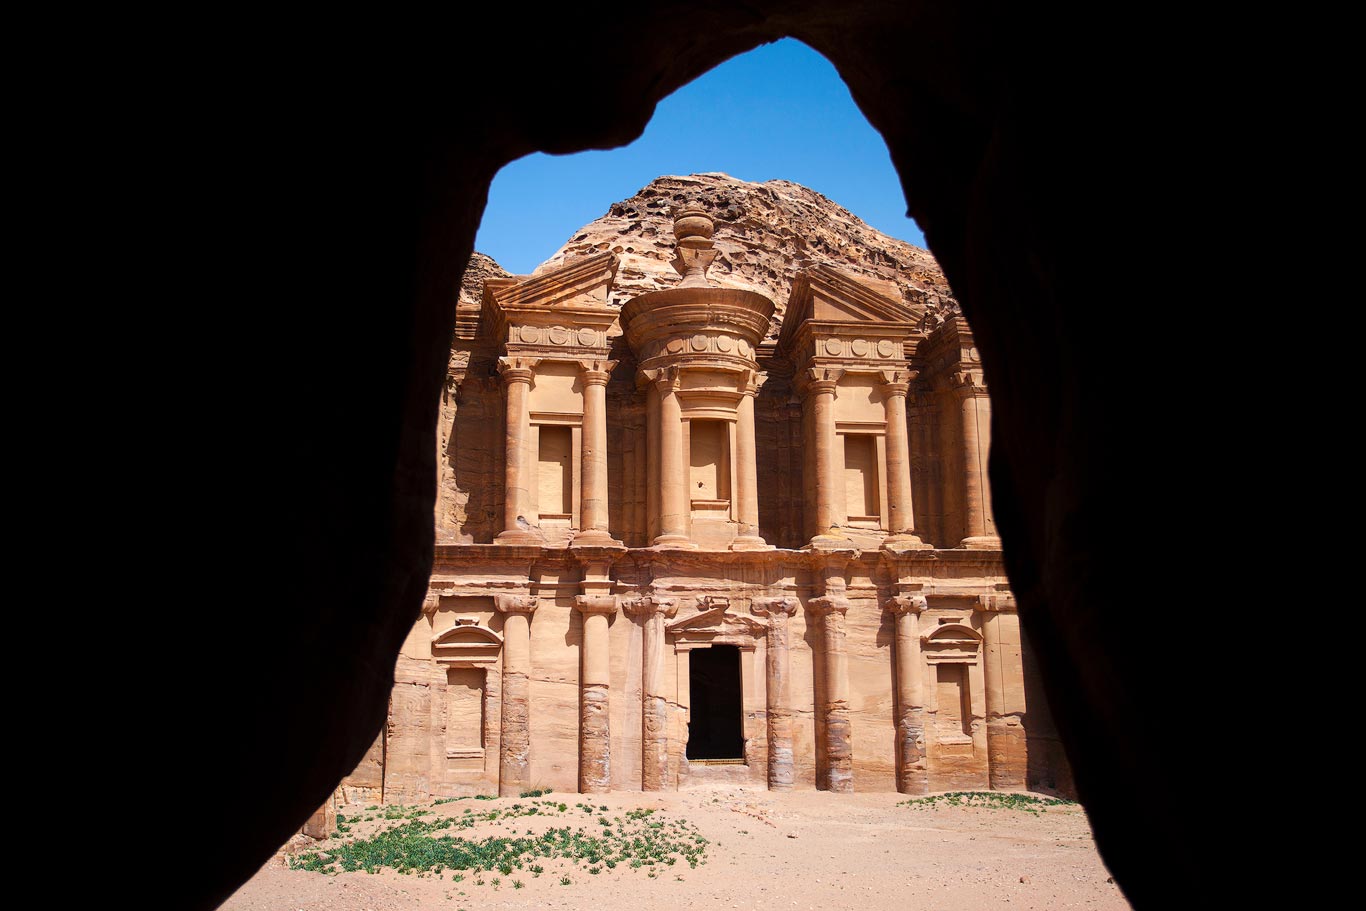 Natural frame of the monastery in Petra, Jordan